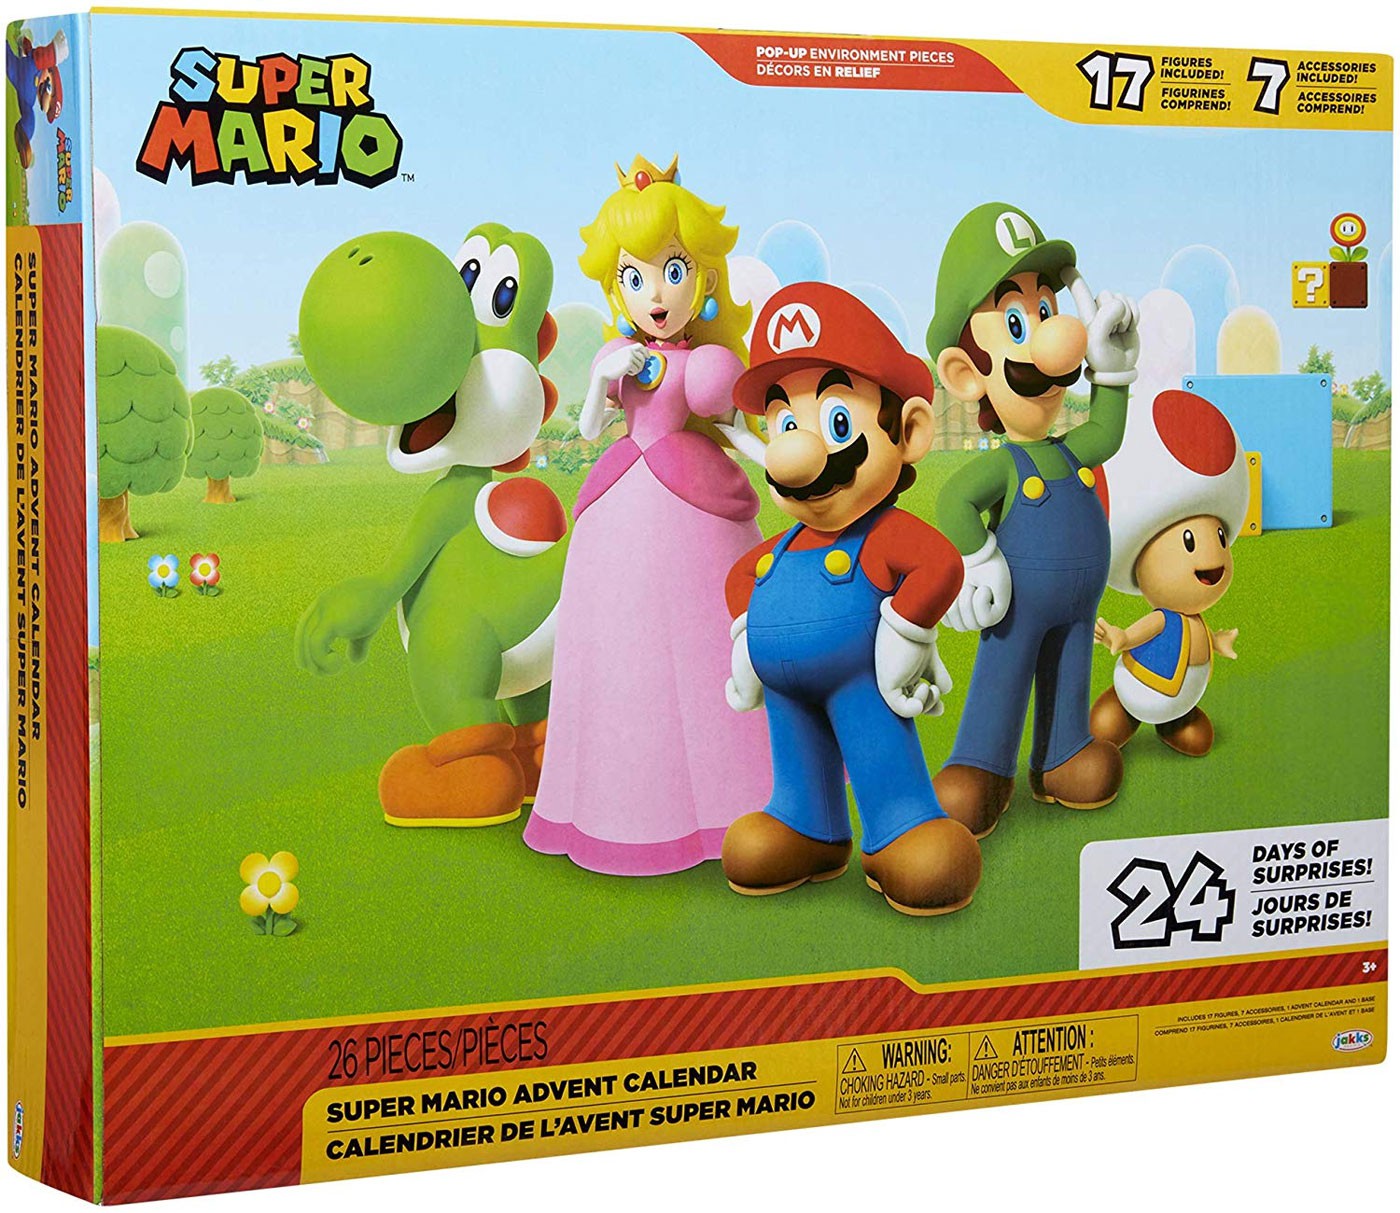 2019 Super Mario Advent Calendar 192995403017 eBay